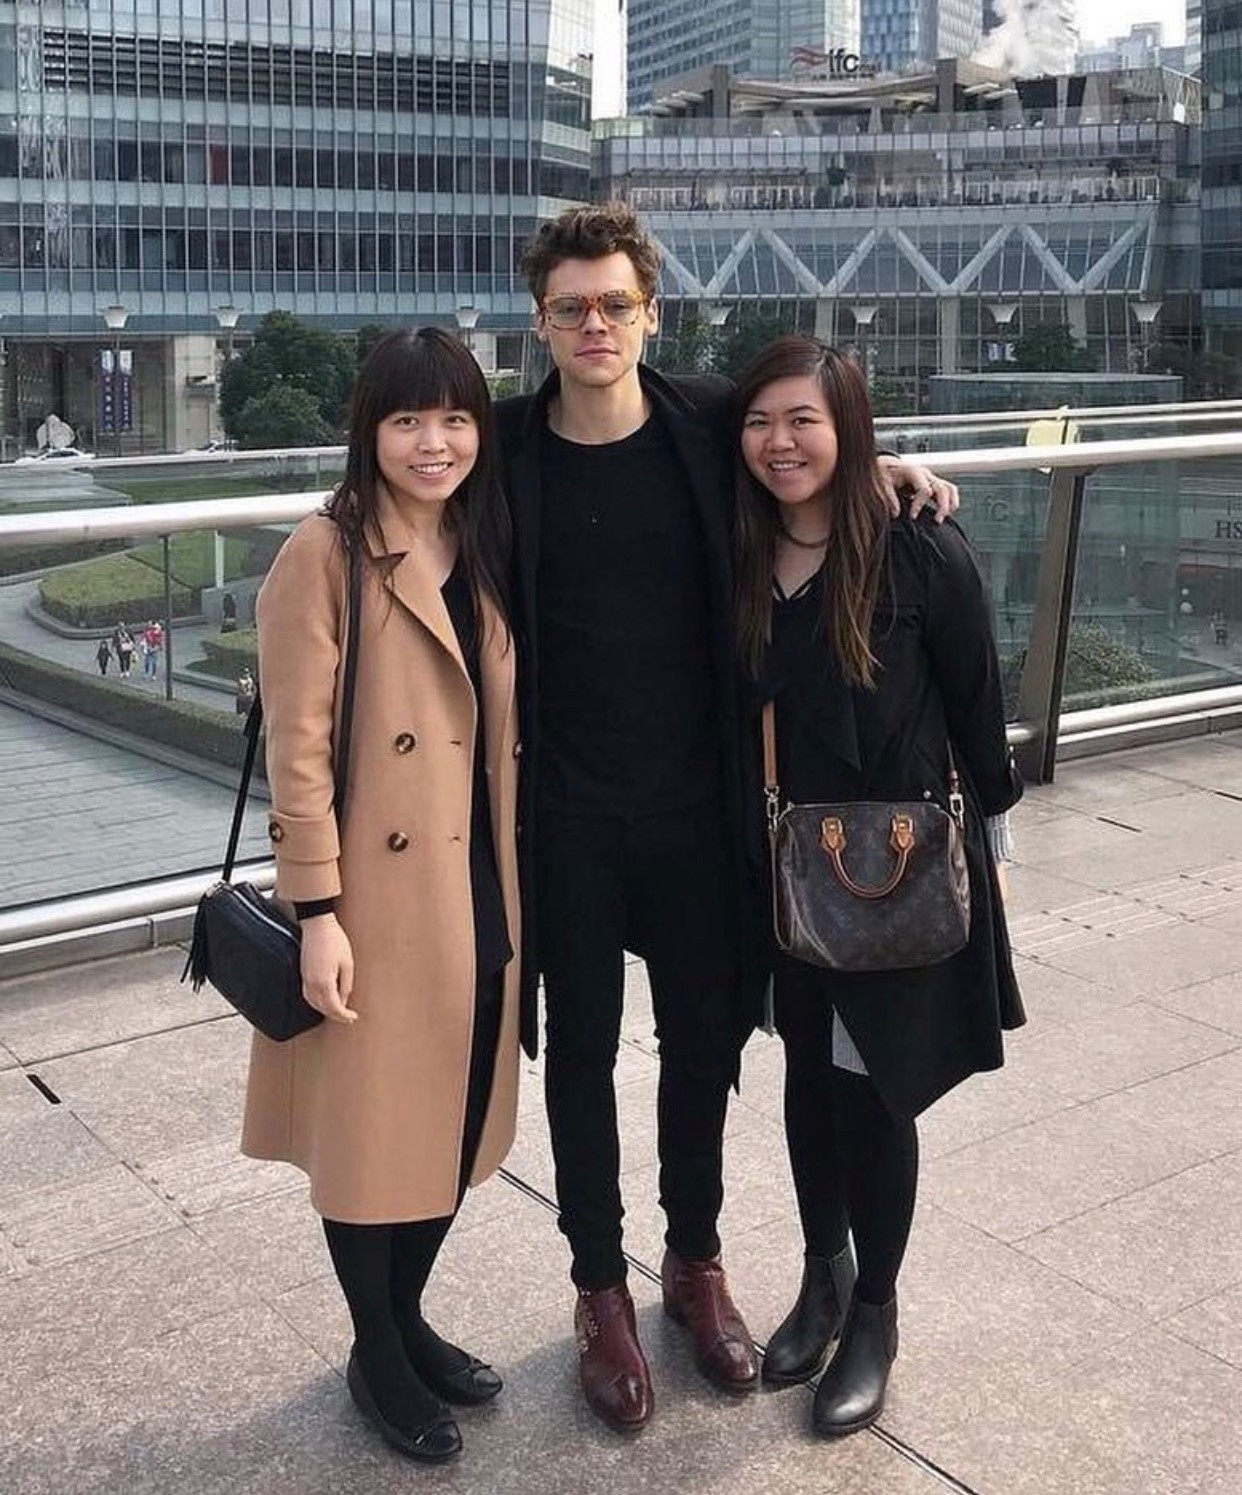 Harry Styles in Shanghai